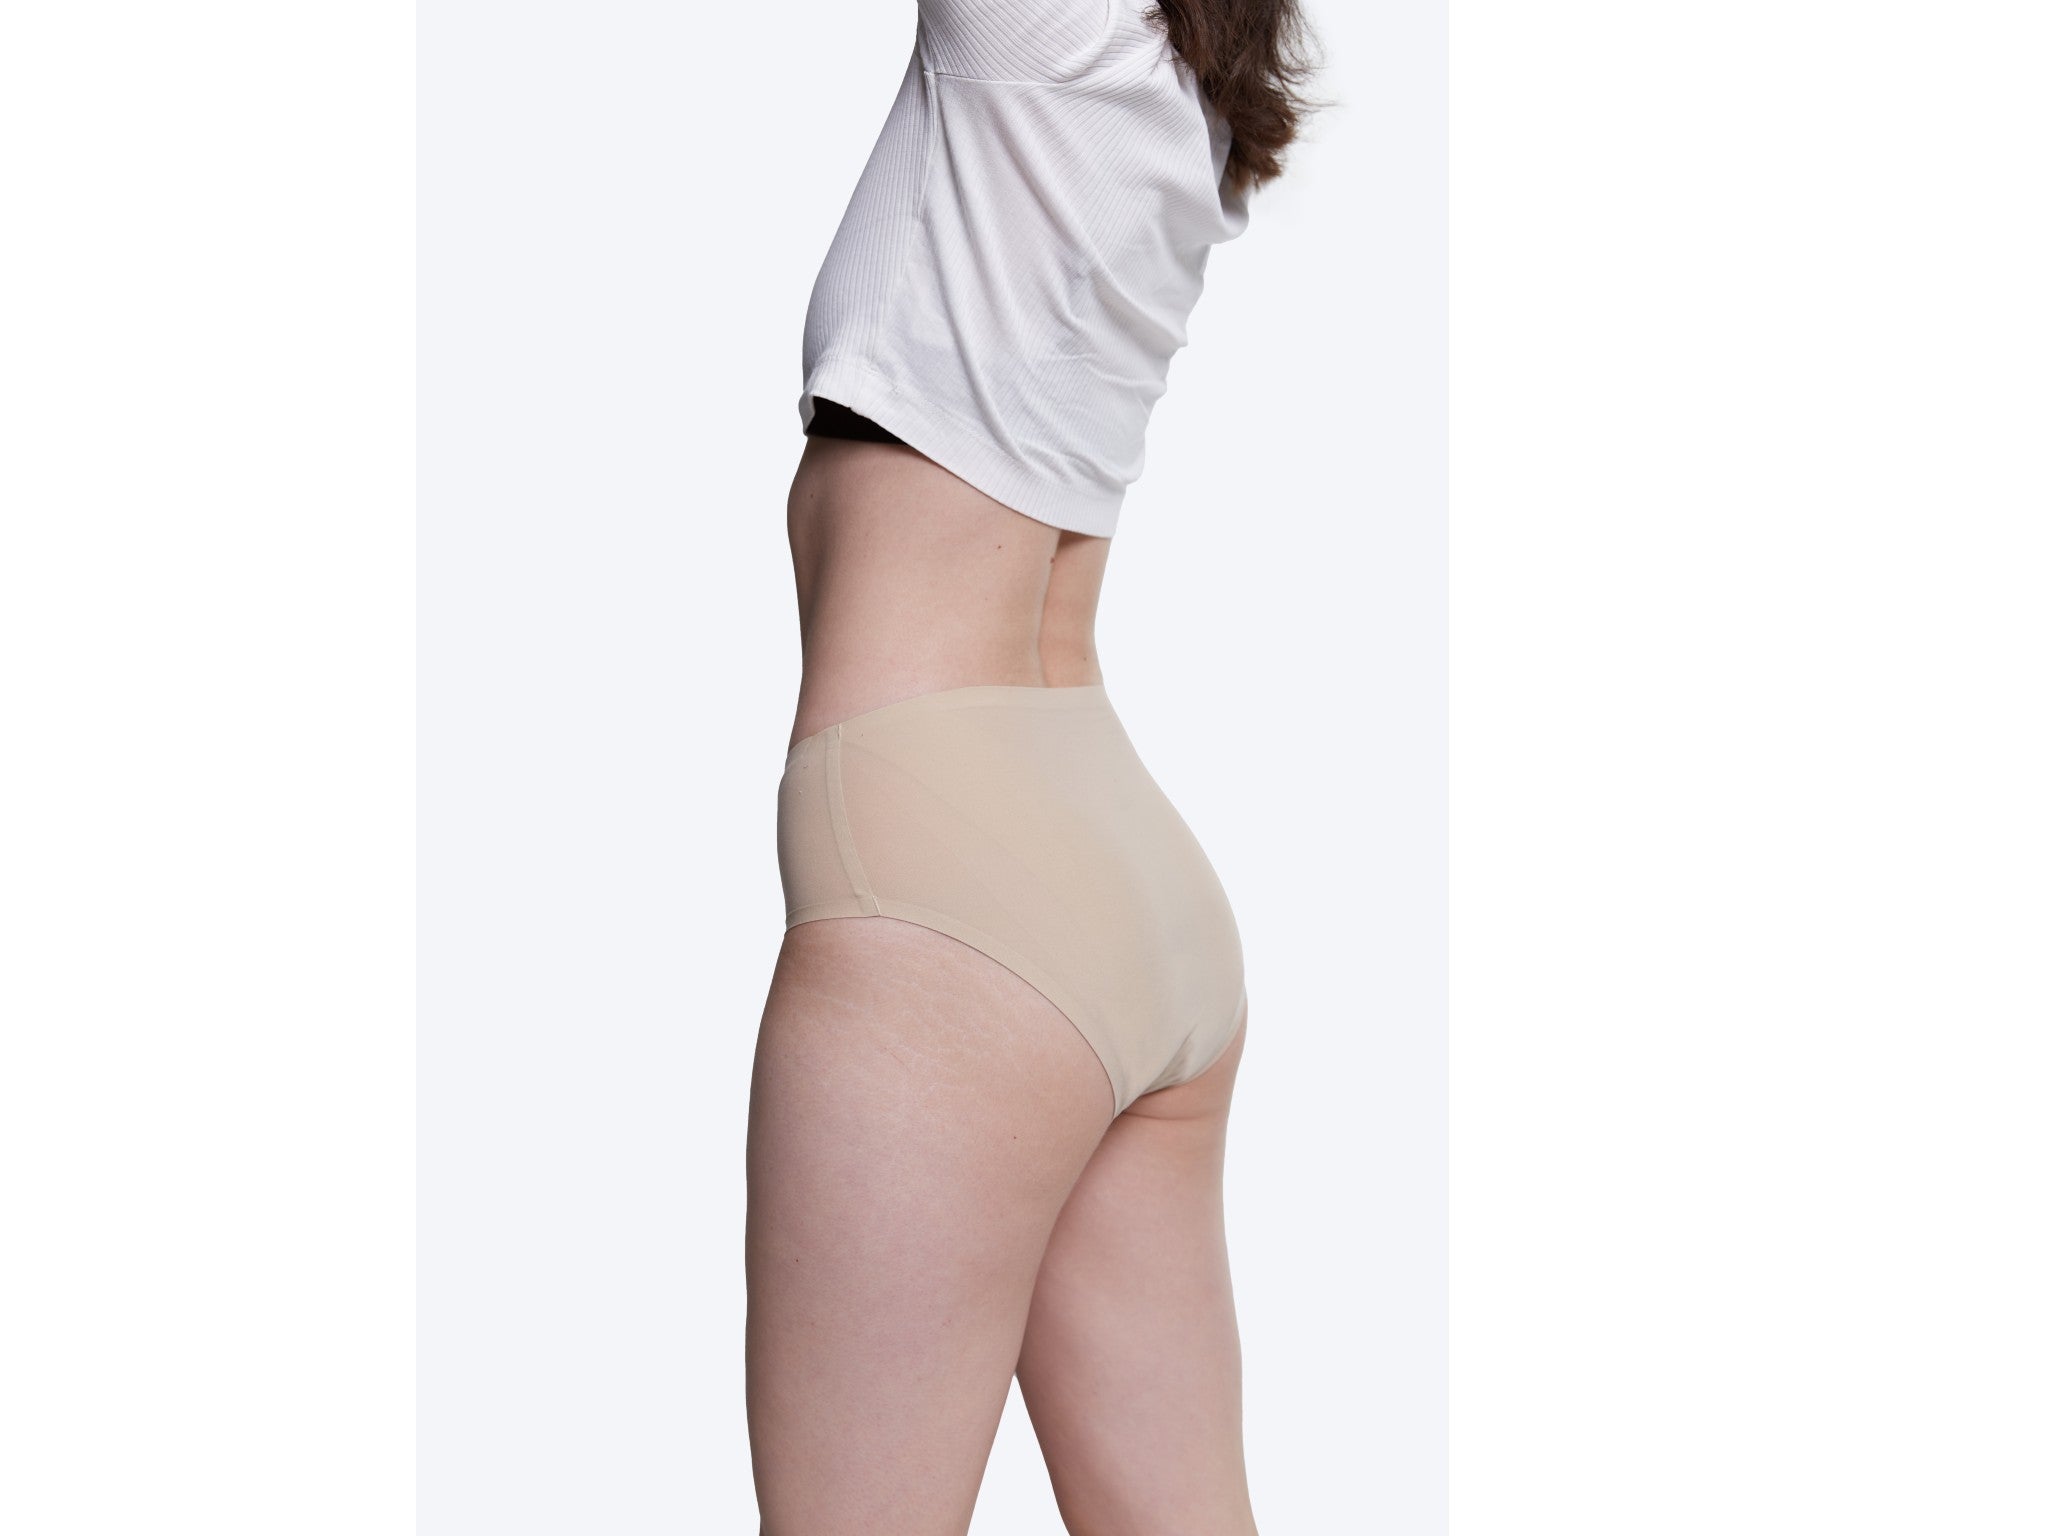 Stretch Seamless Period Underwear Midi Brief Medium